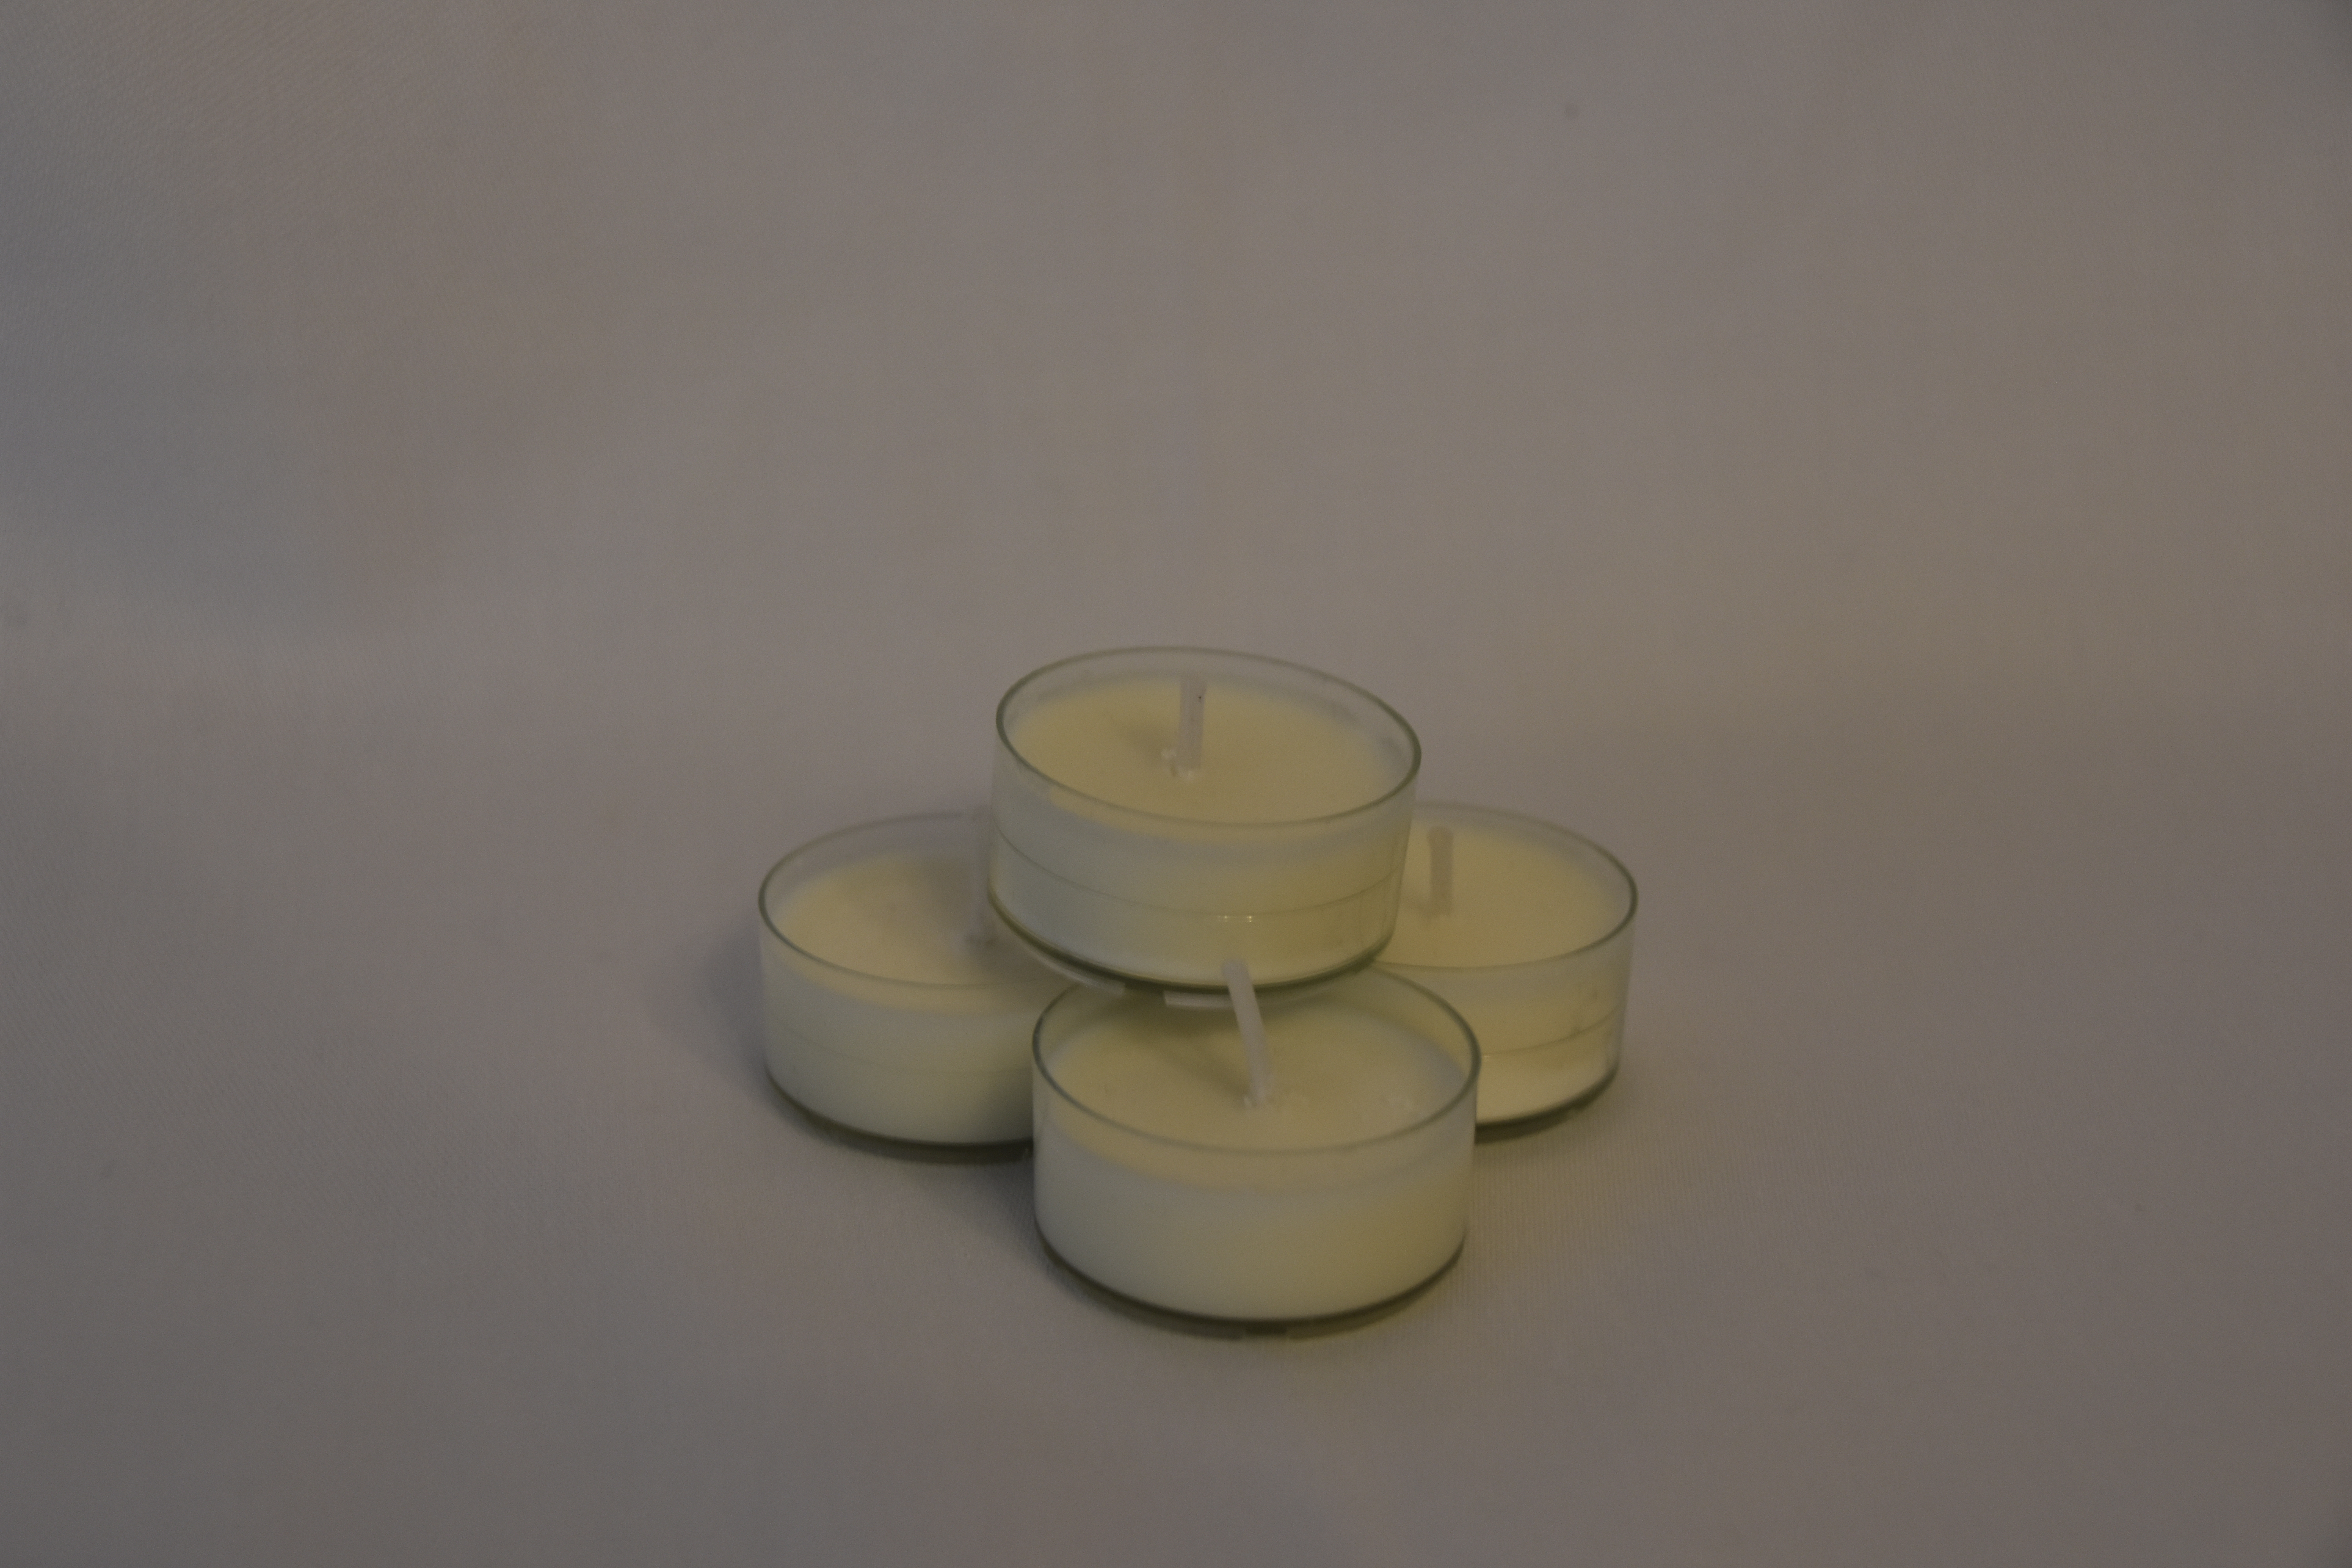 Shop Gifts - Fragrance - Tealights - Choice of blends from Céadfaí √CF √Veg